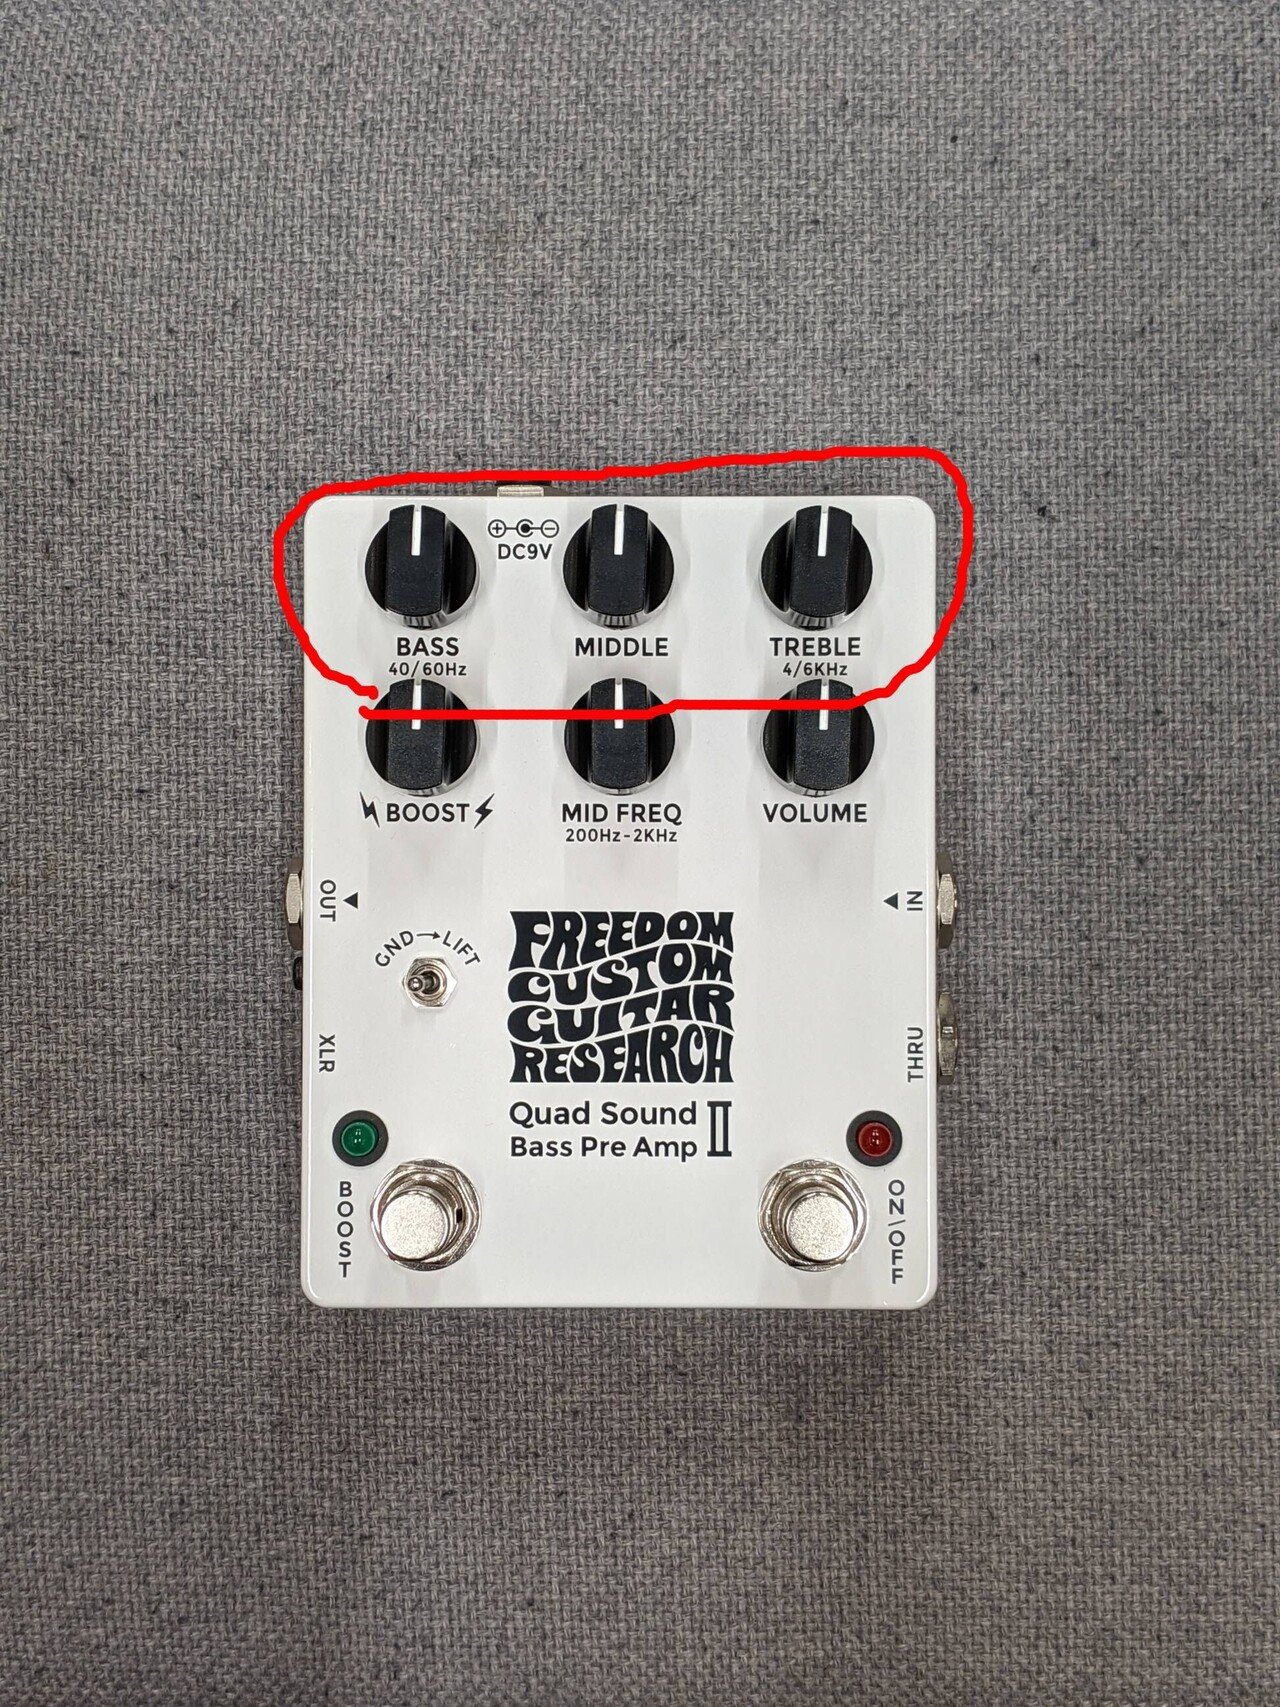 Freedom Custom Guitar Research “Quad Sound Bass Pre Amp II 